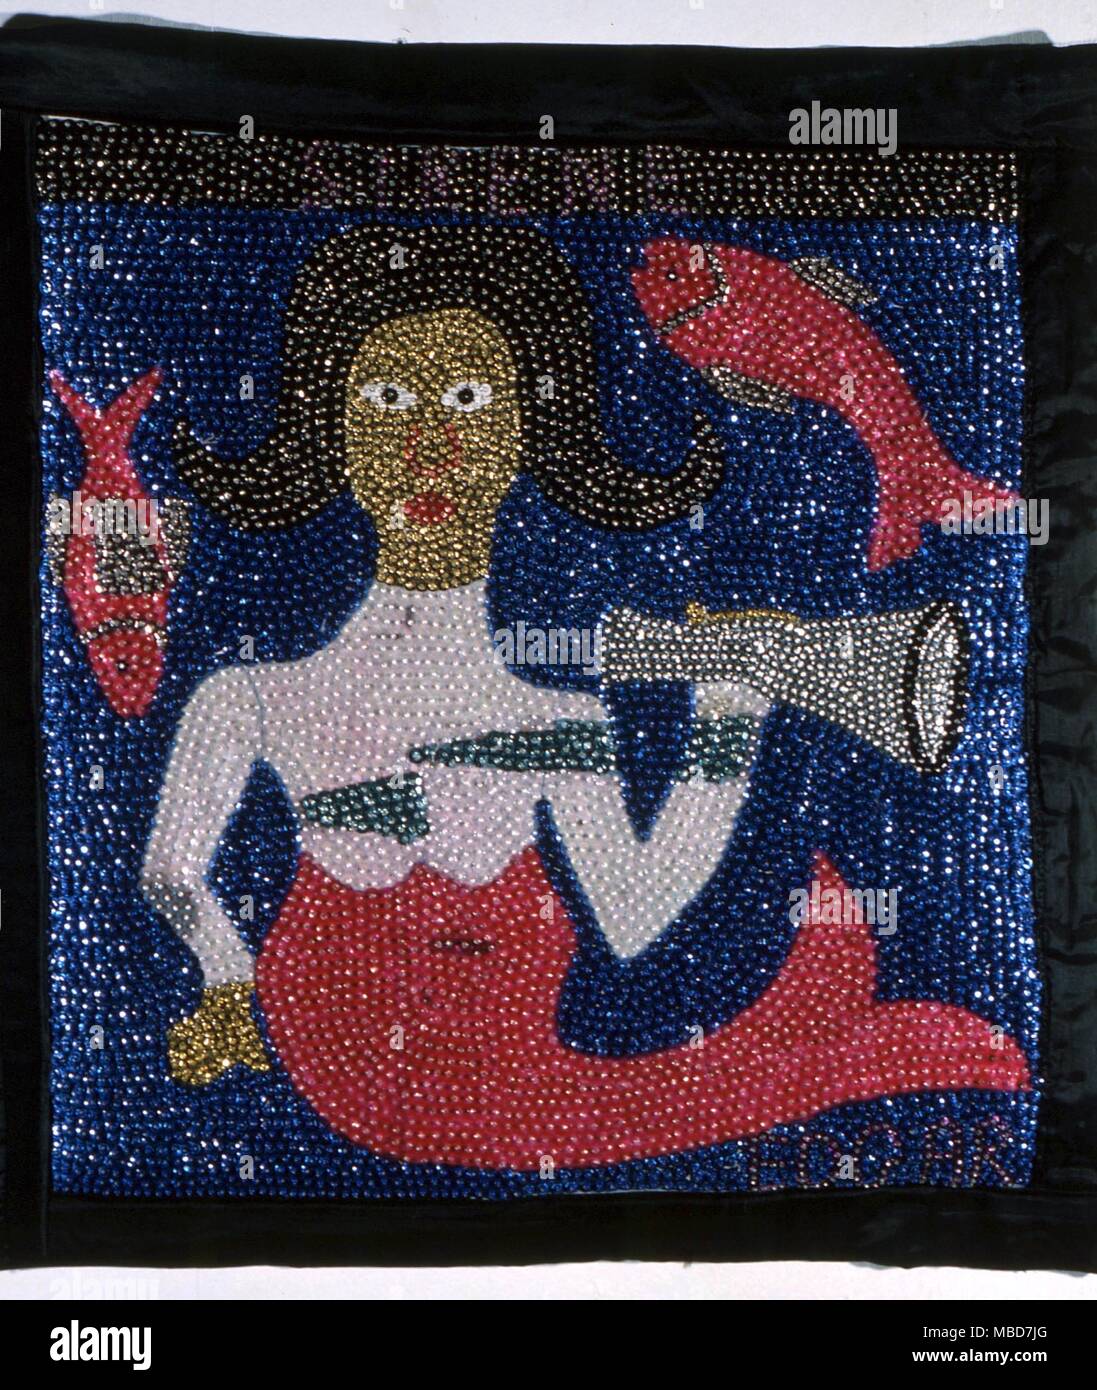 VOODOO ART Voodoun altar cloth with the classical mermaid symbol. By Edgar, 'La Sirene', 1993 Stock Photo